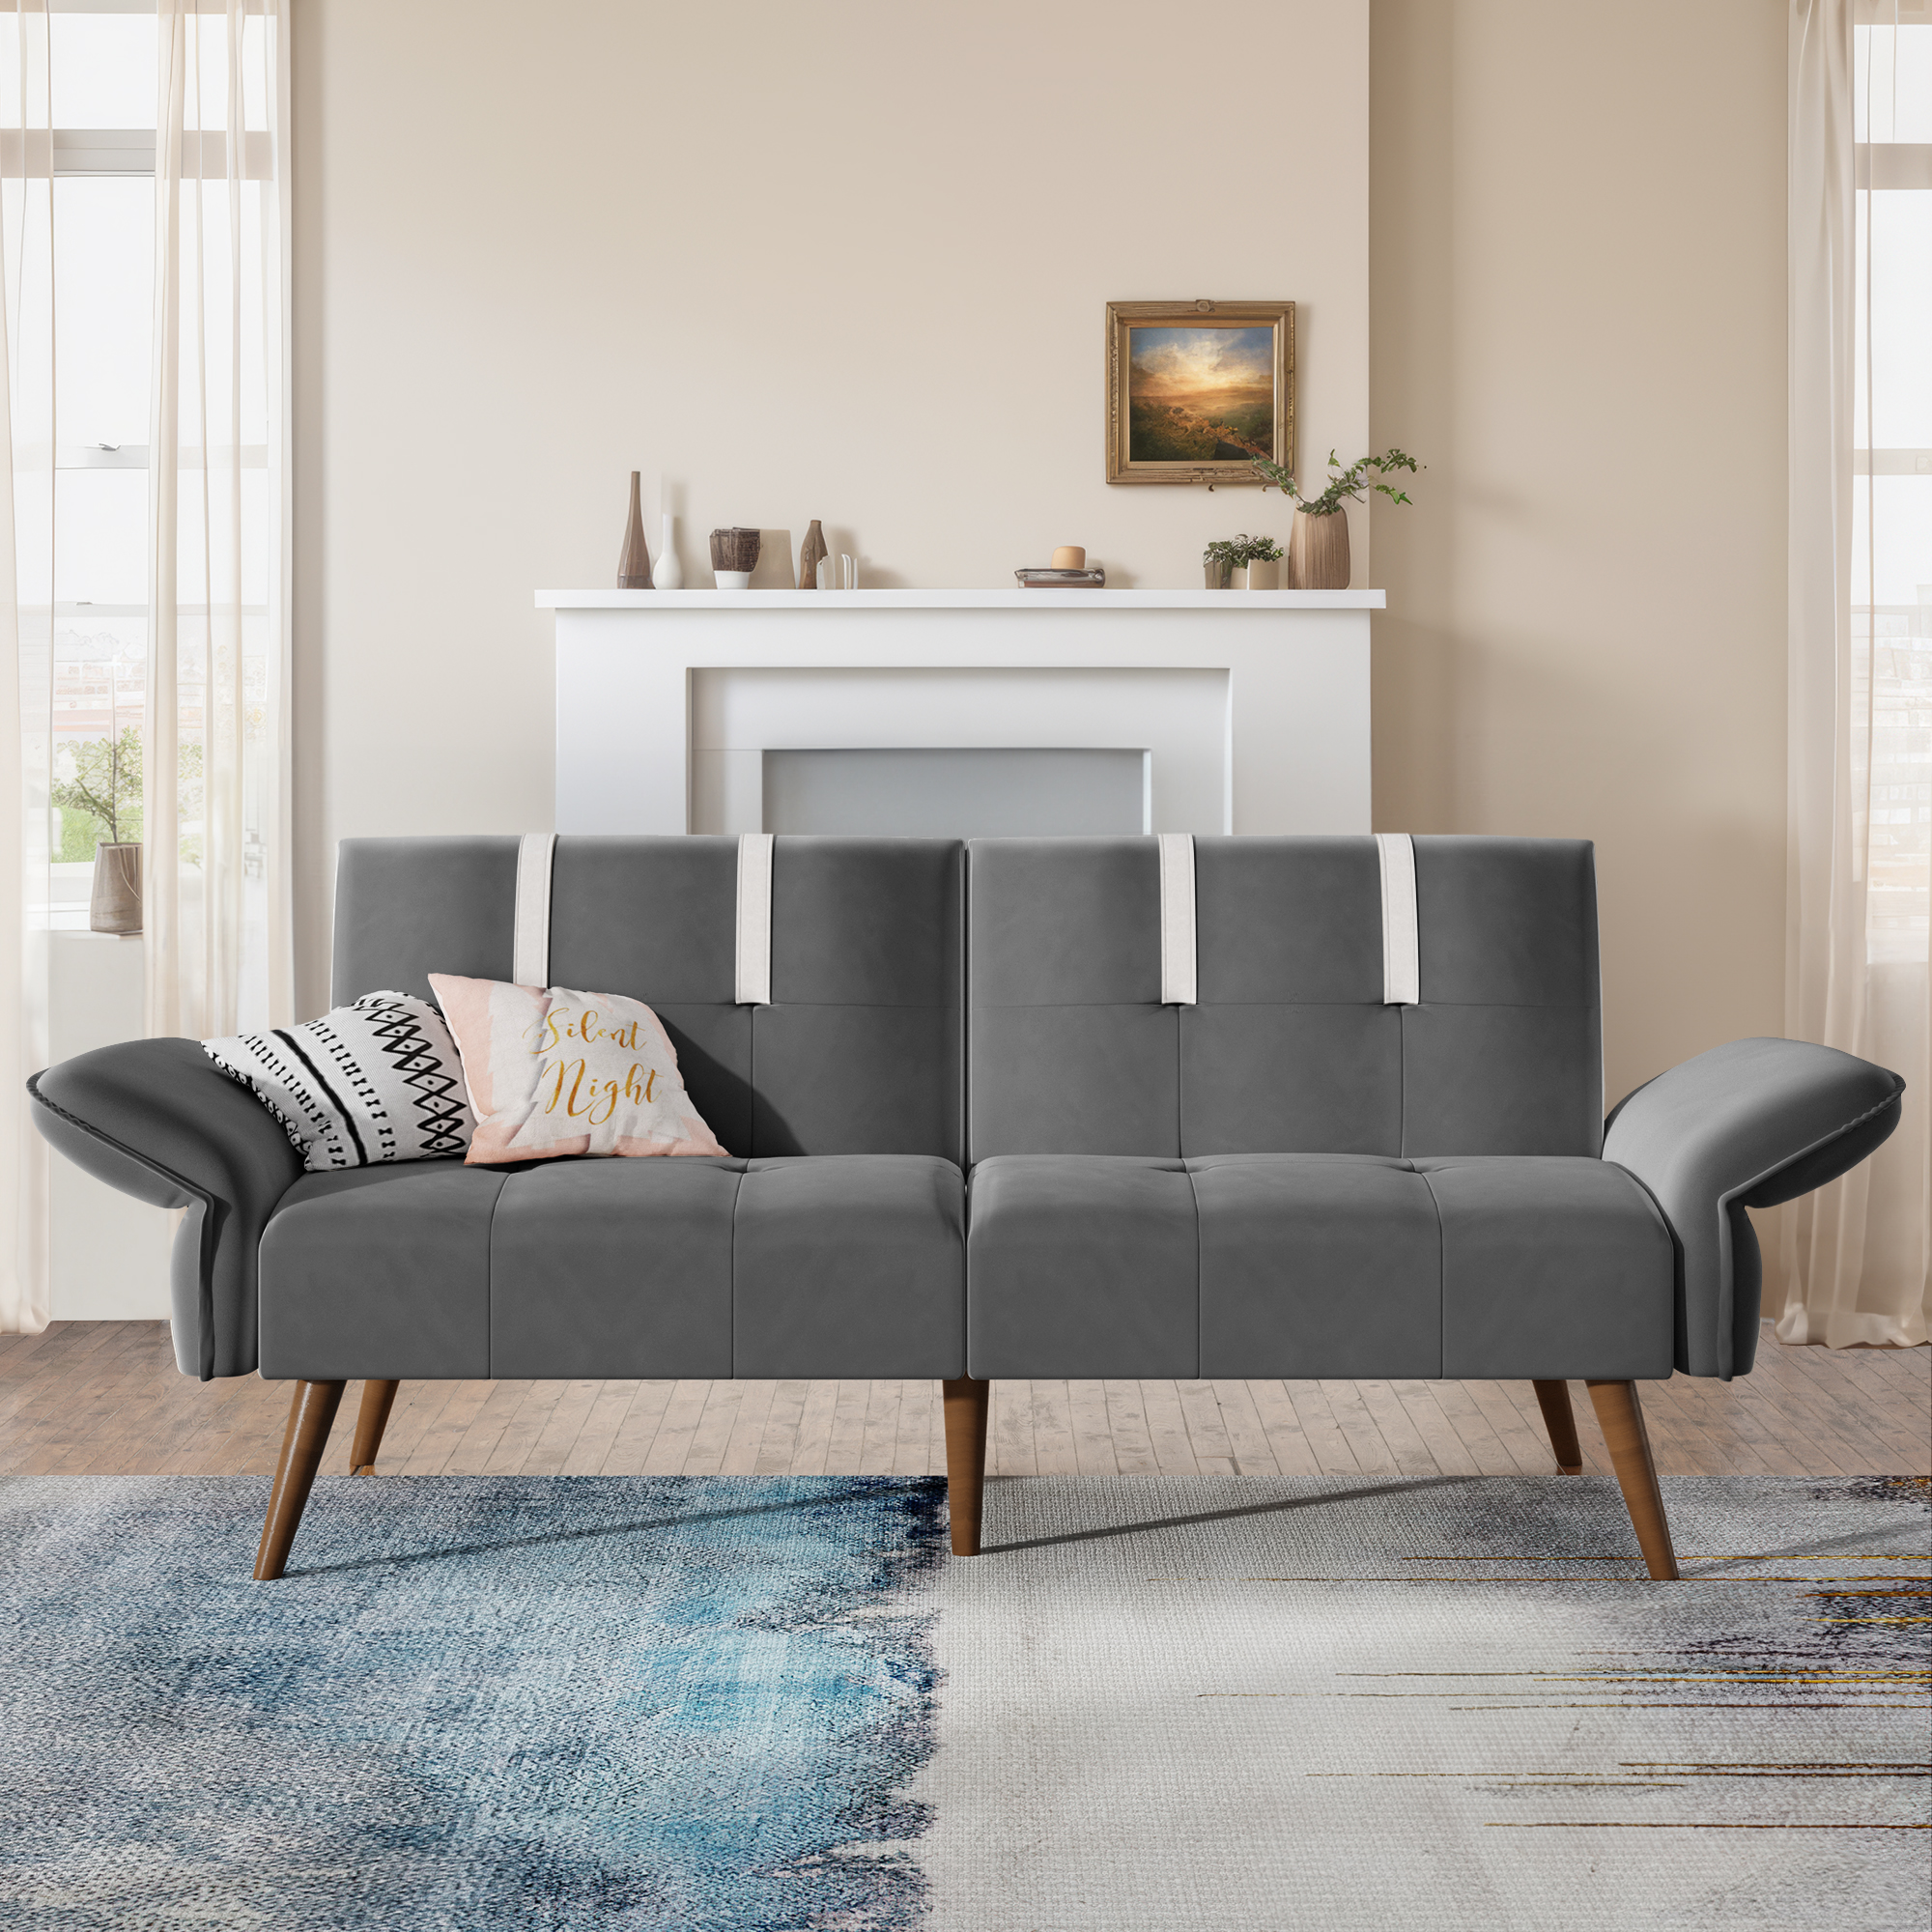 Walsunny 79" Velvet Futon Couch Sofa Bed, Folding Sleeper Loveseat with Adjustable Armrests Backrest Dark Grey - image 1 of 8